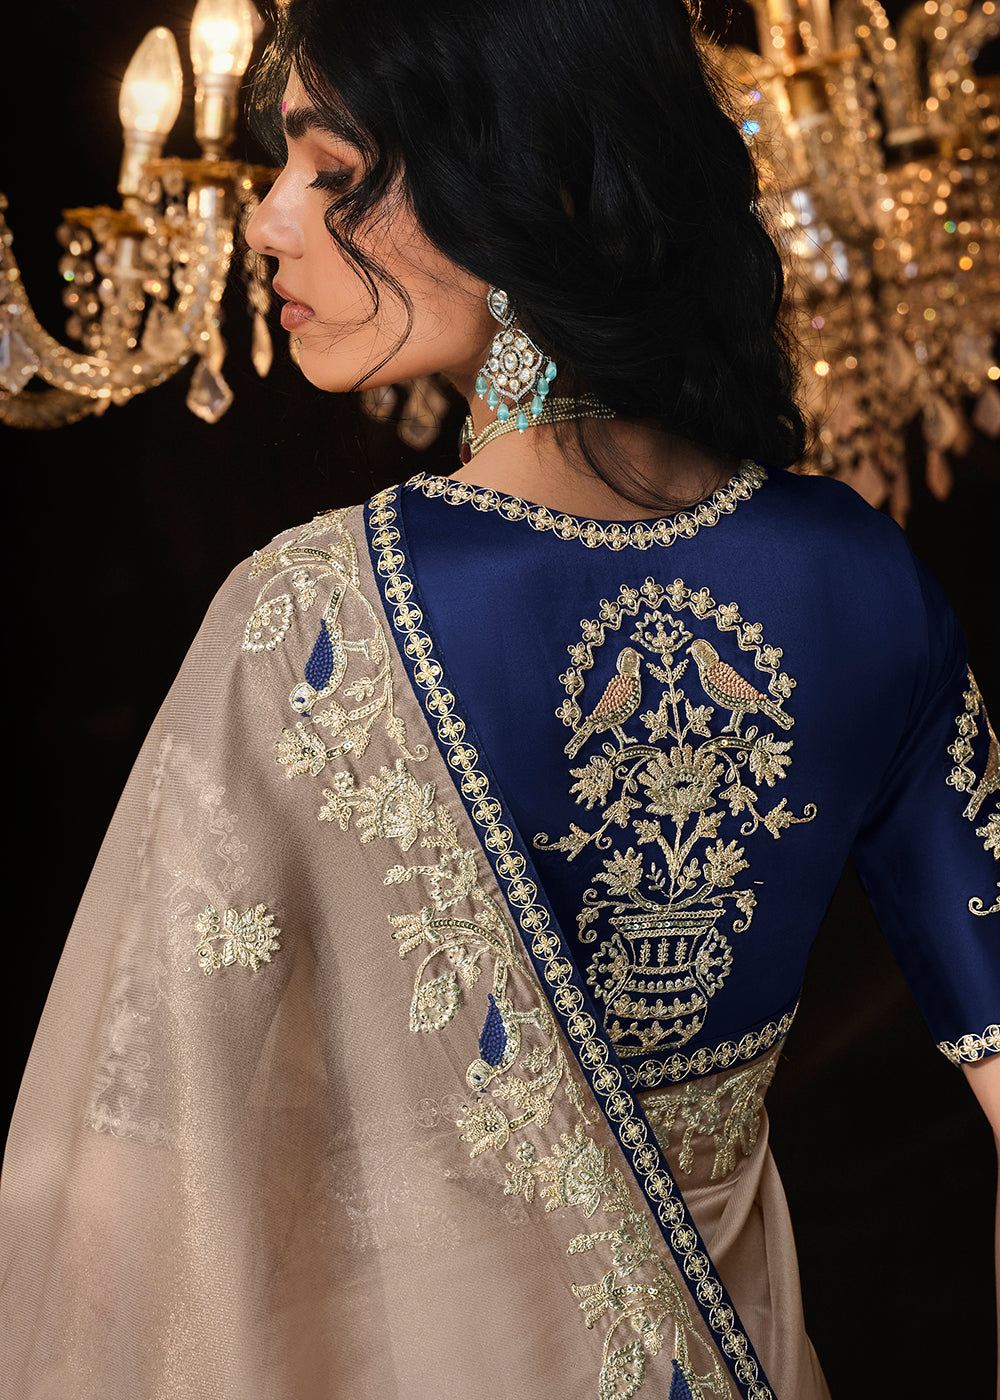 Buy Now Fancy Cream Embroidered Designer Wedding Wear Saree Online in USA, UK, Canada & Worldwide at Empress Clothing. 